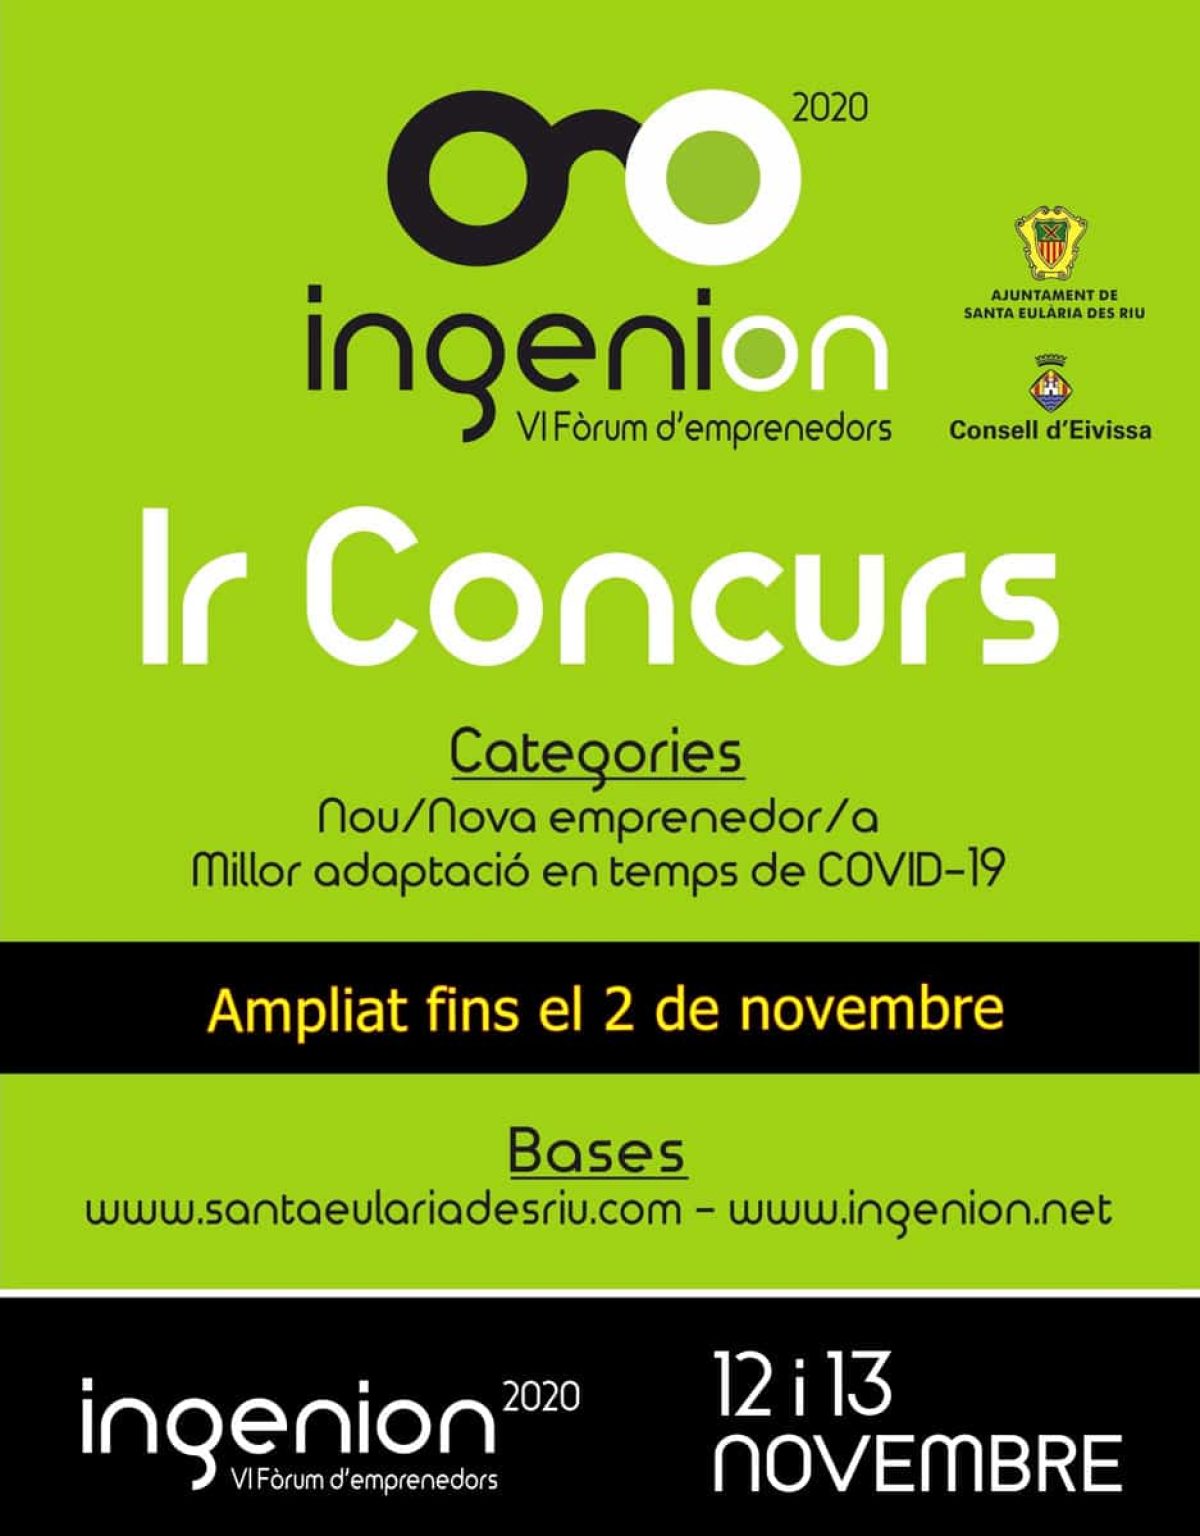 i-concours-ingenion-santa-eulalia-ibiza-2020-welcometoibiza